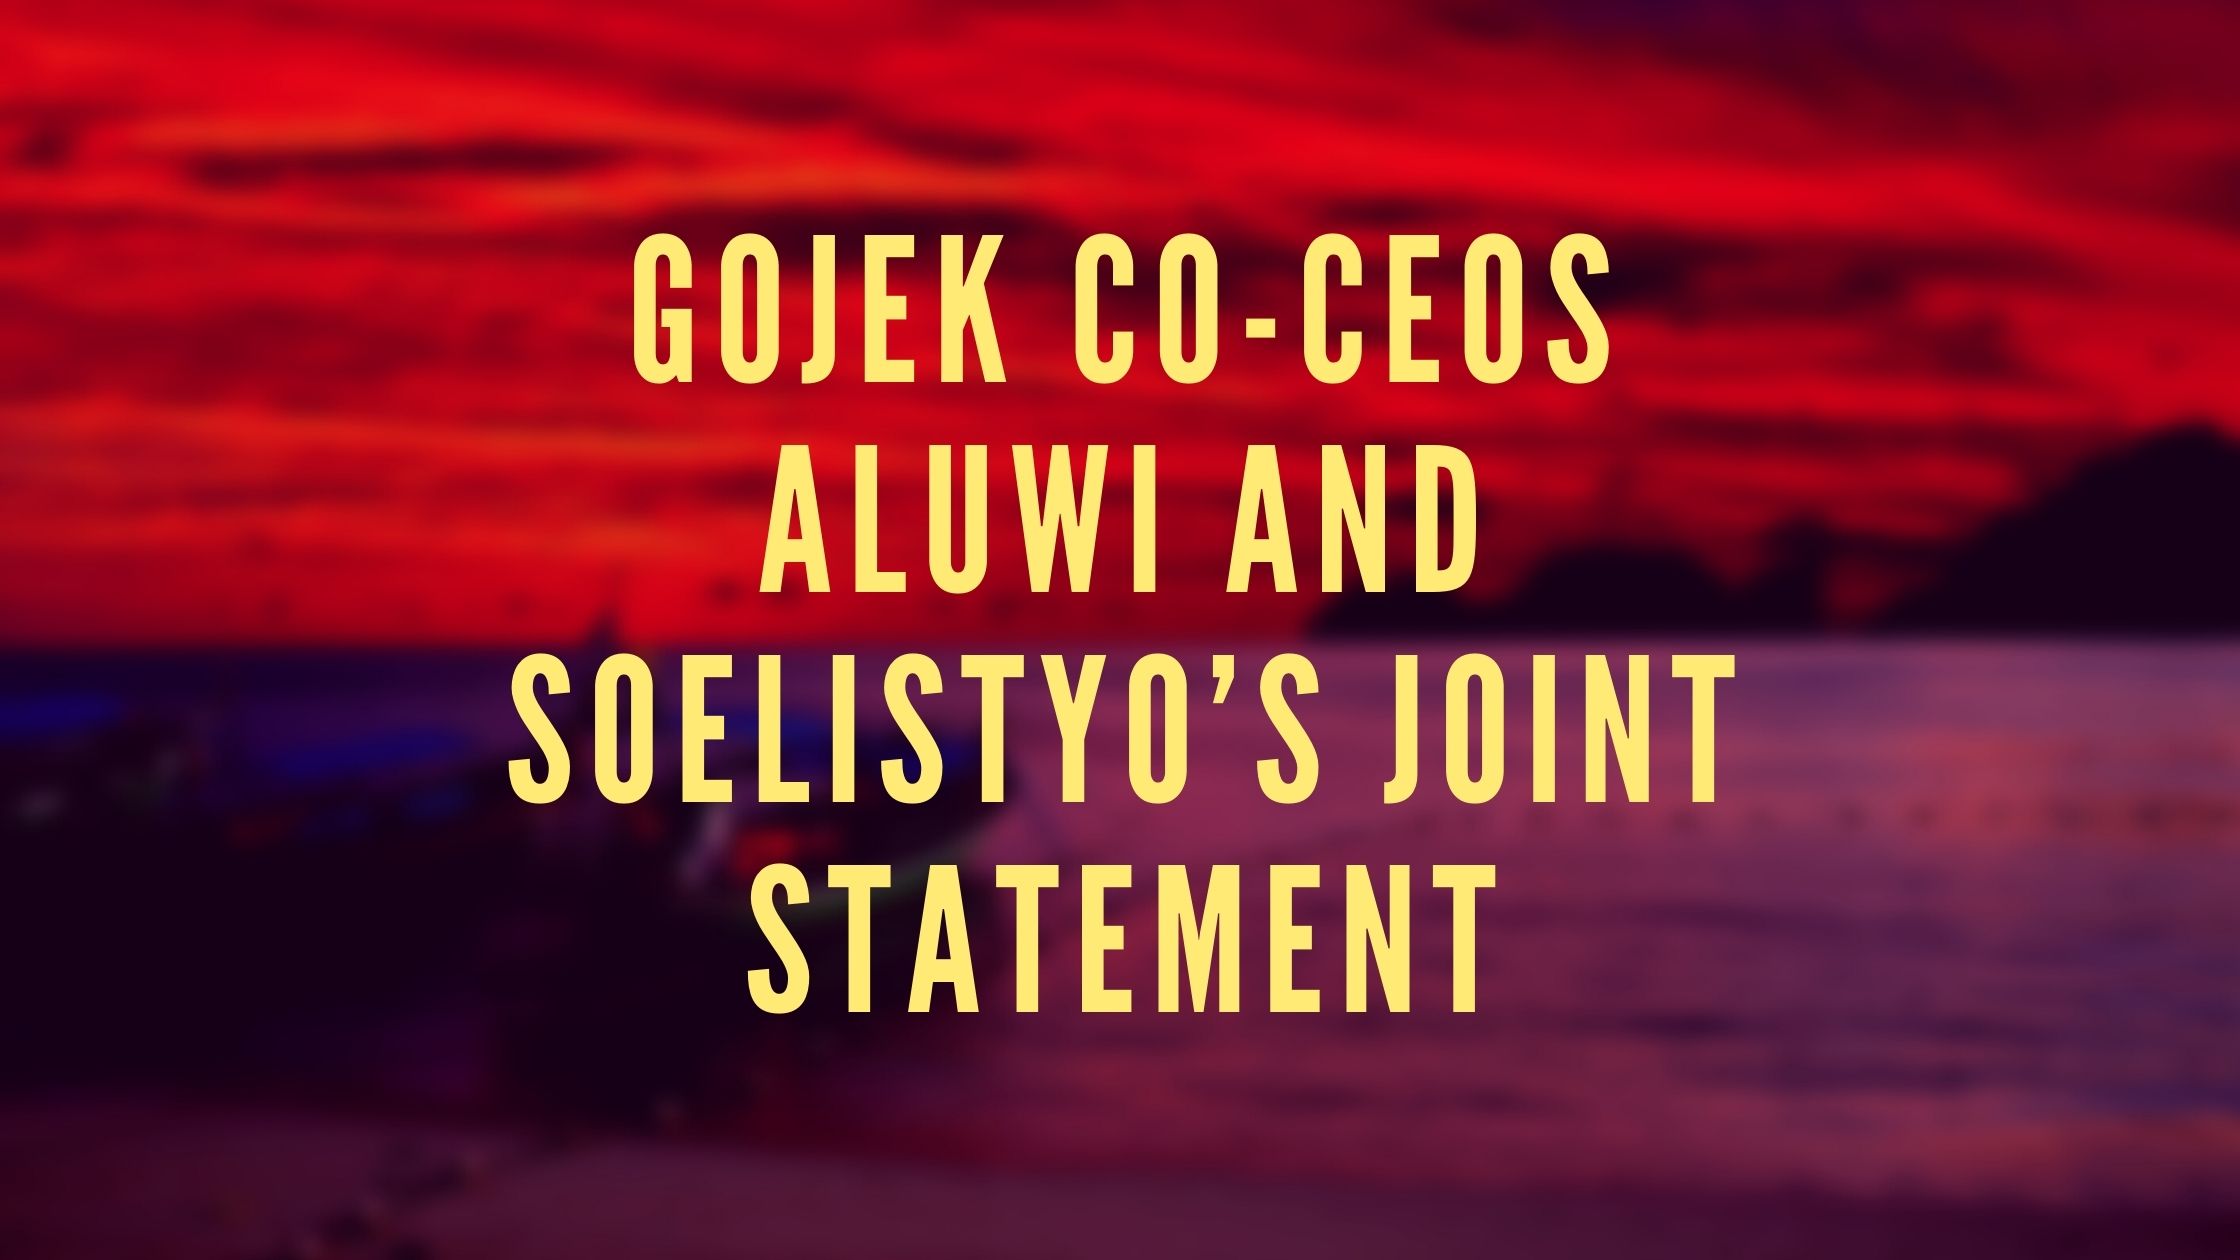 GOJEK CO-CEOS ALUWI AND SOELISTYO’S JOINT STATEMENT